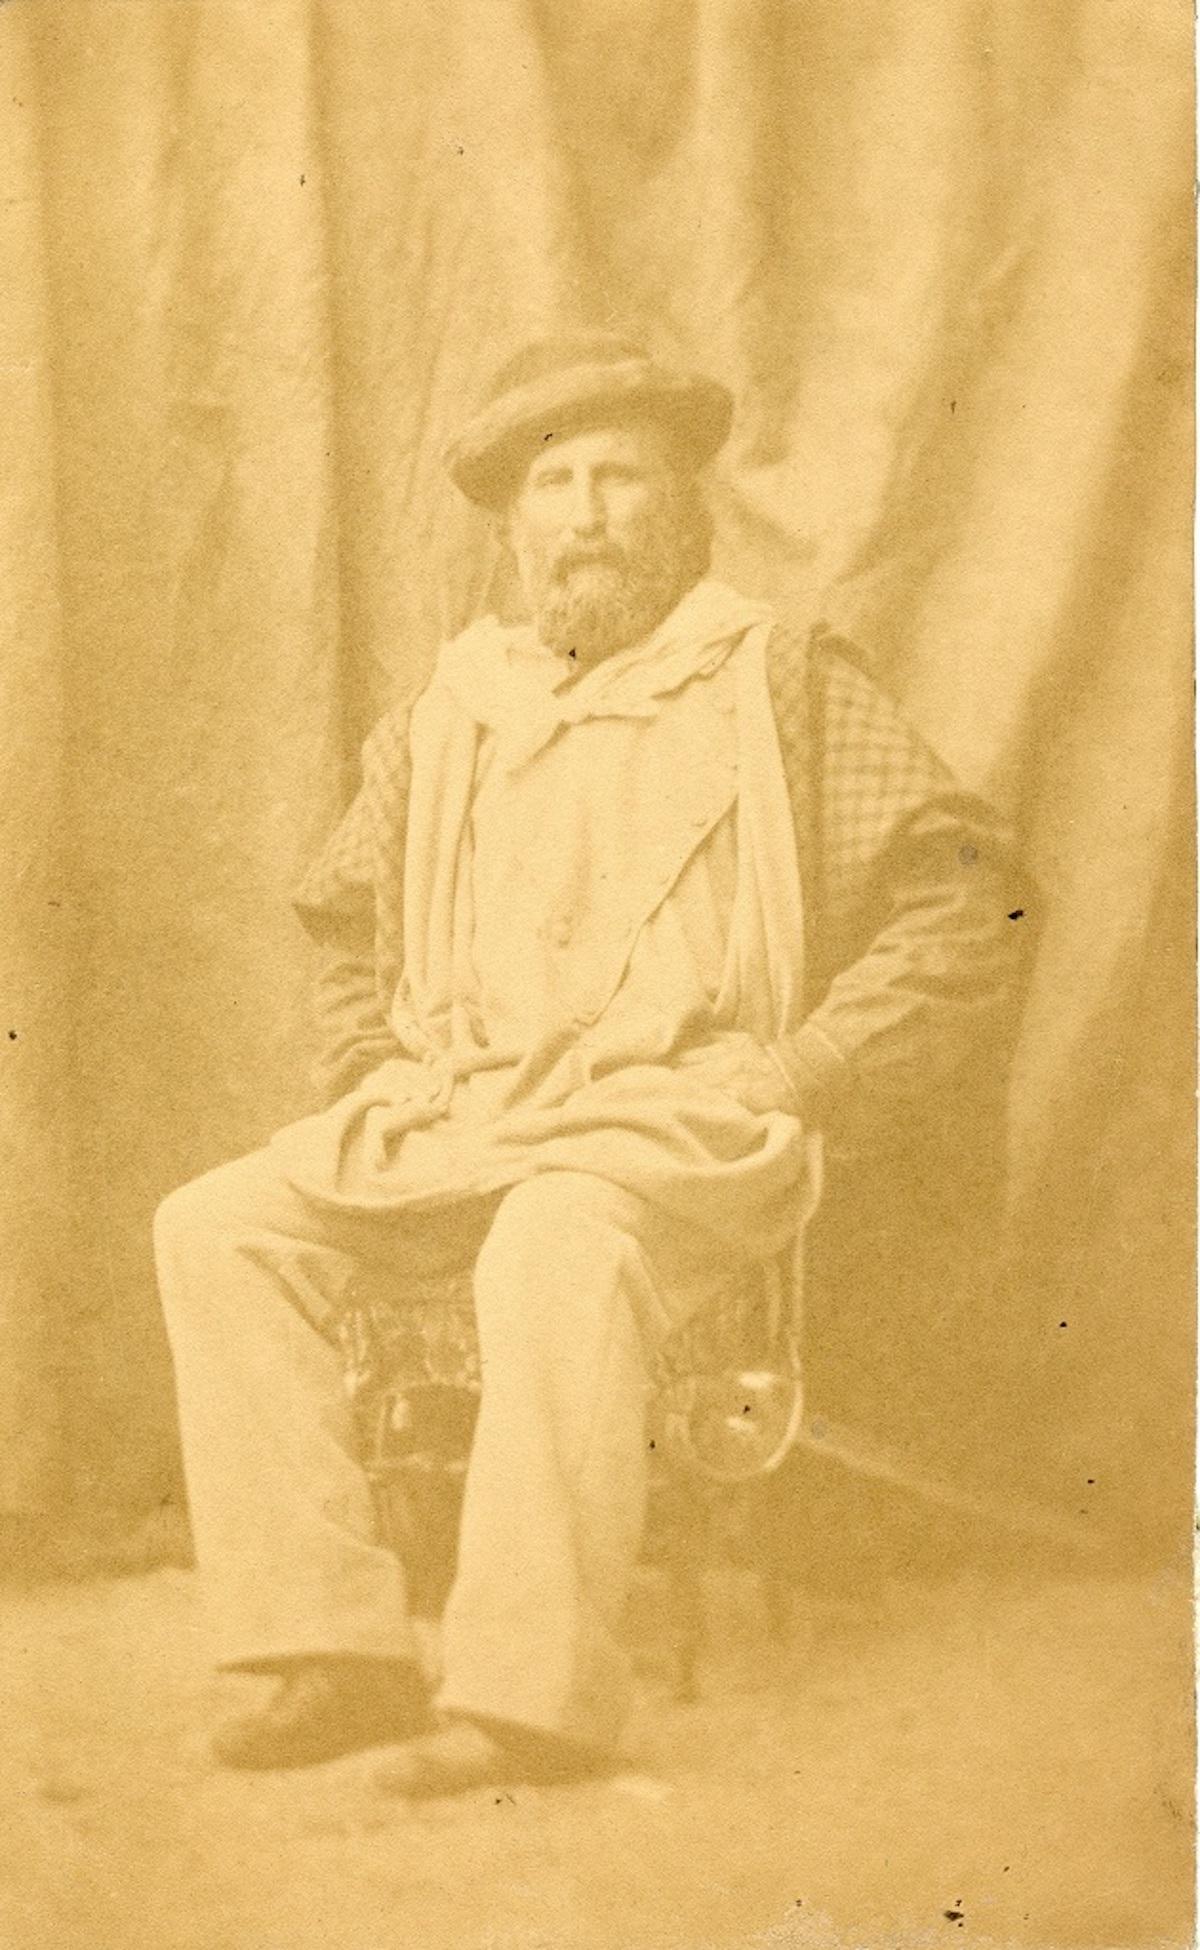 Unknown Black and White Photograph - Early Signed Portrait of Giuseppe Garibaldi - Original Albumen Print 1860